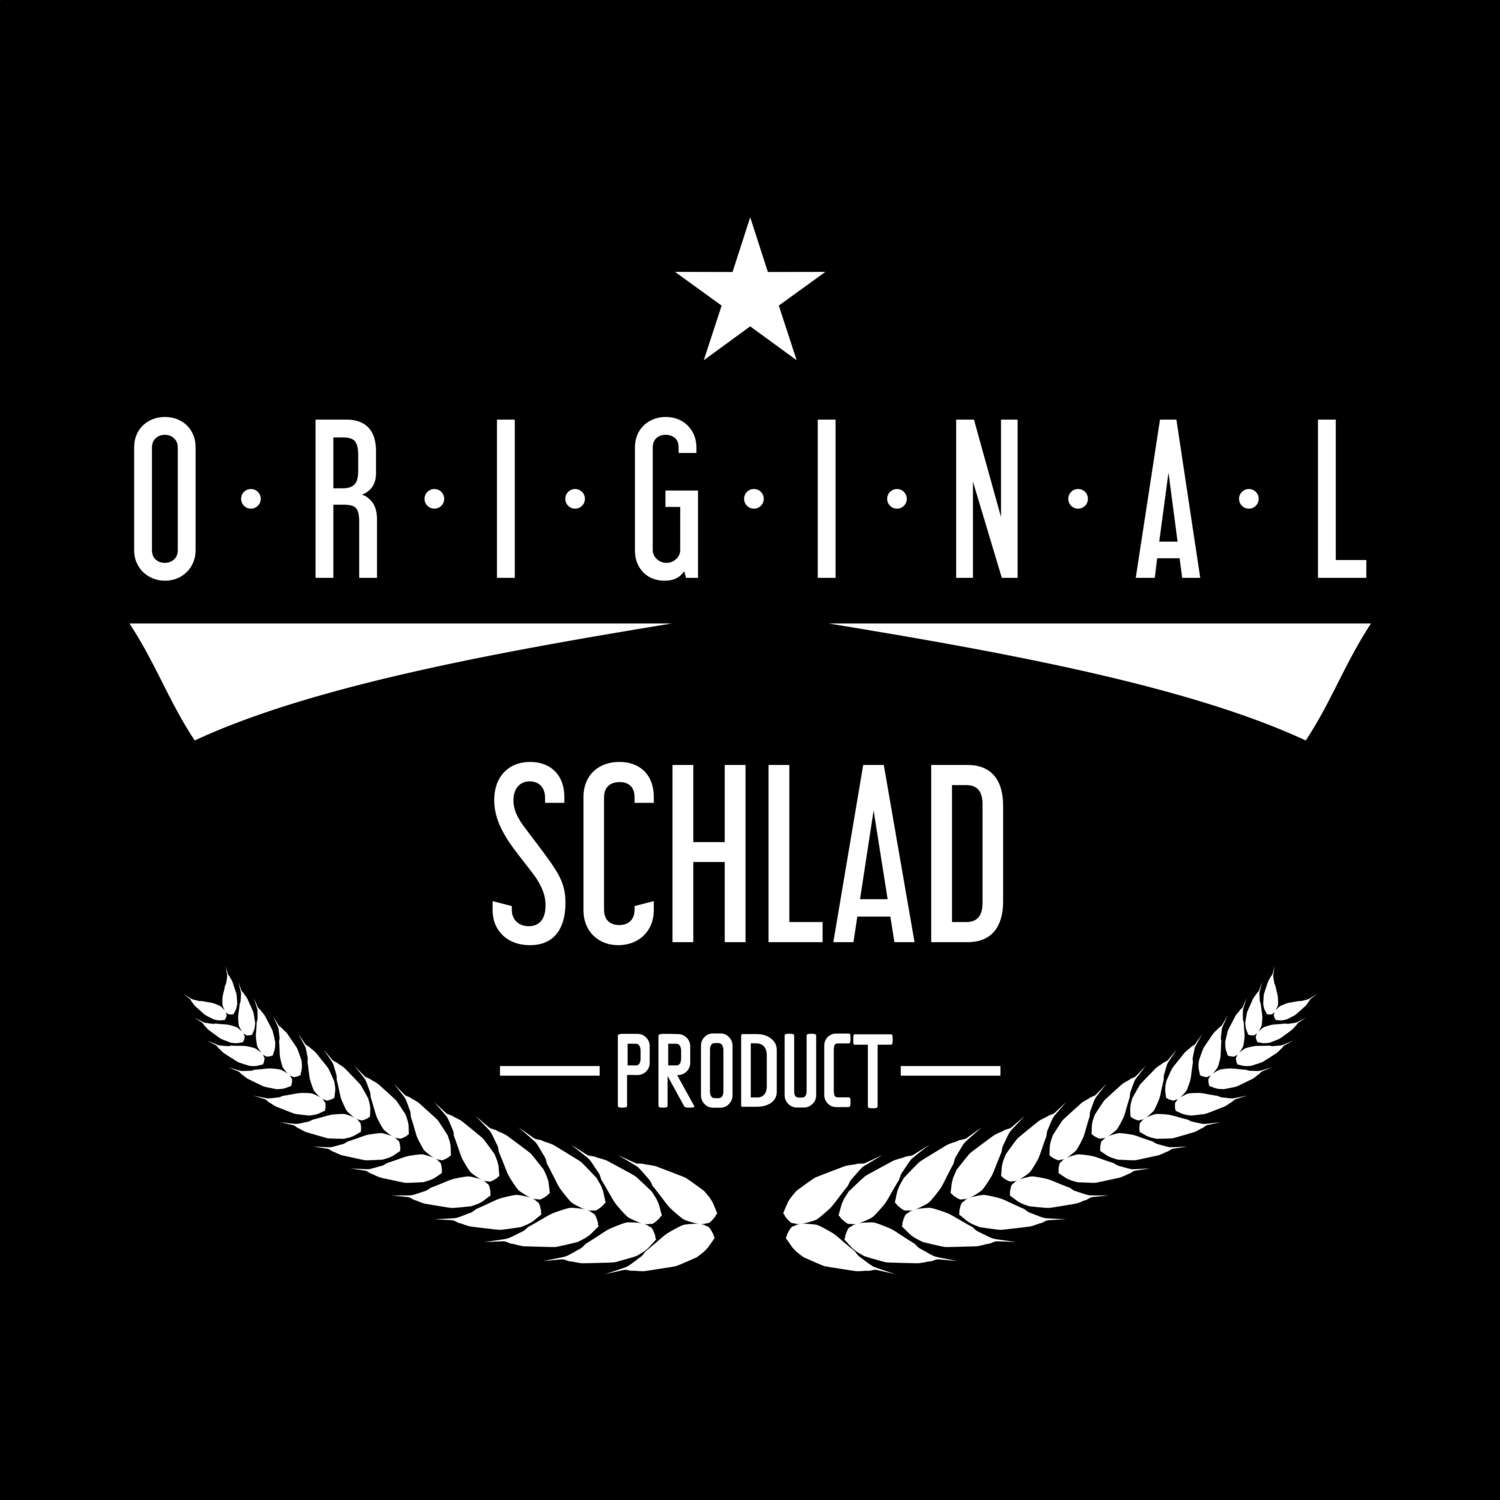 Schlad T-Shirt »Original Product«